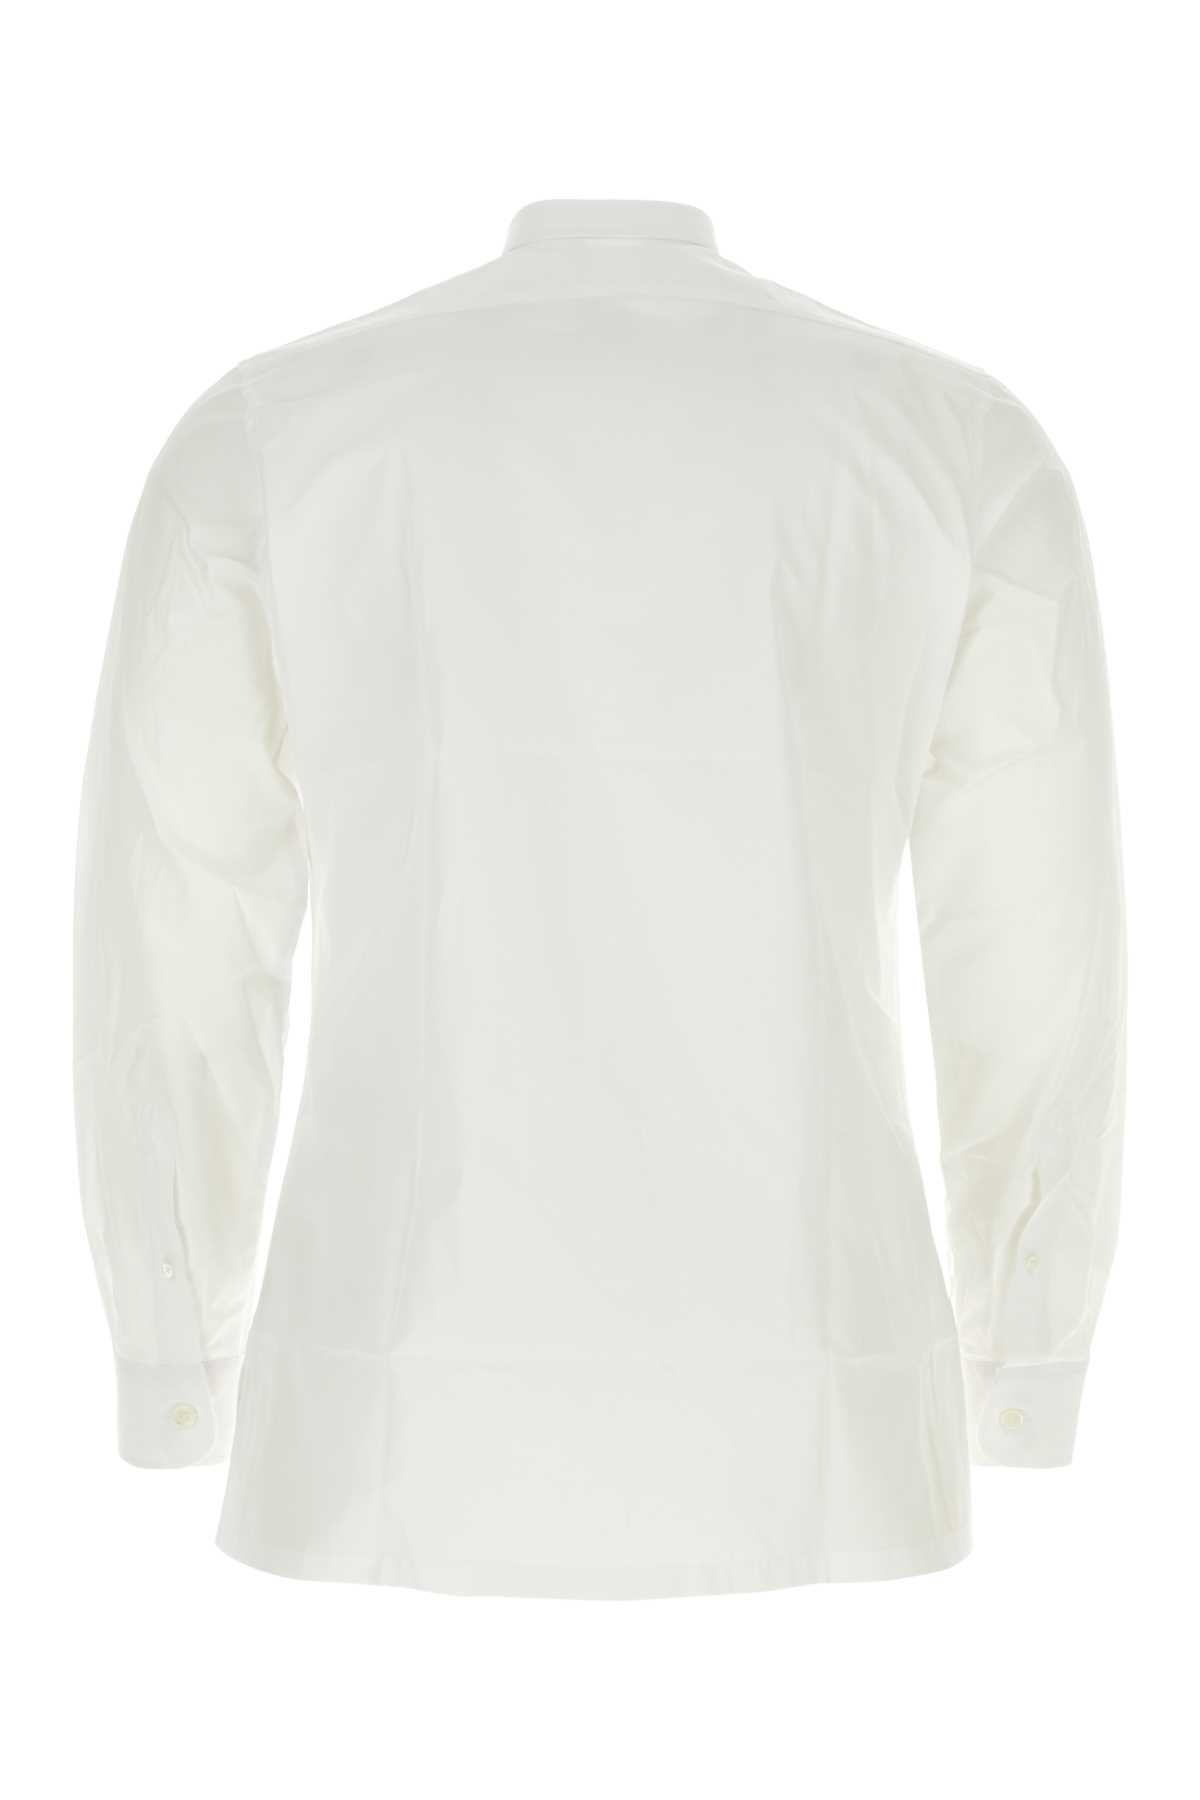 Givenchy White Poplin Shirt